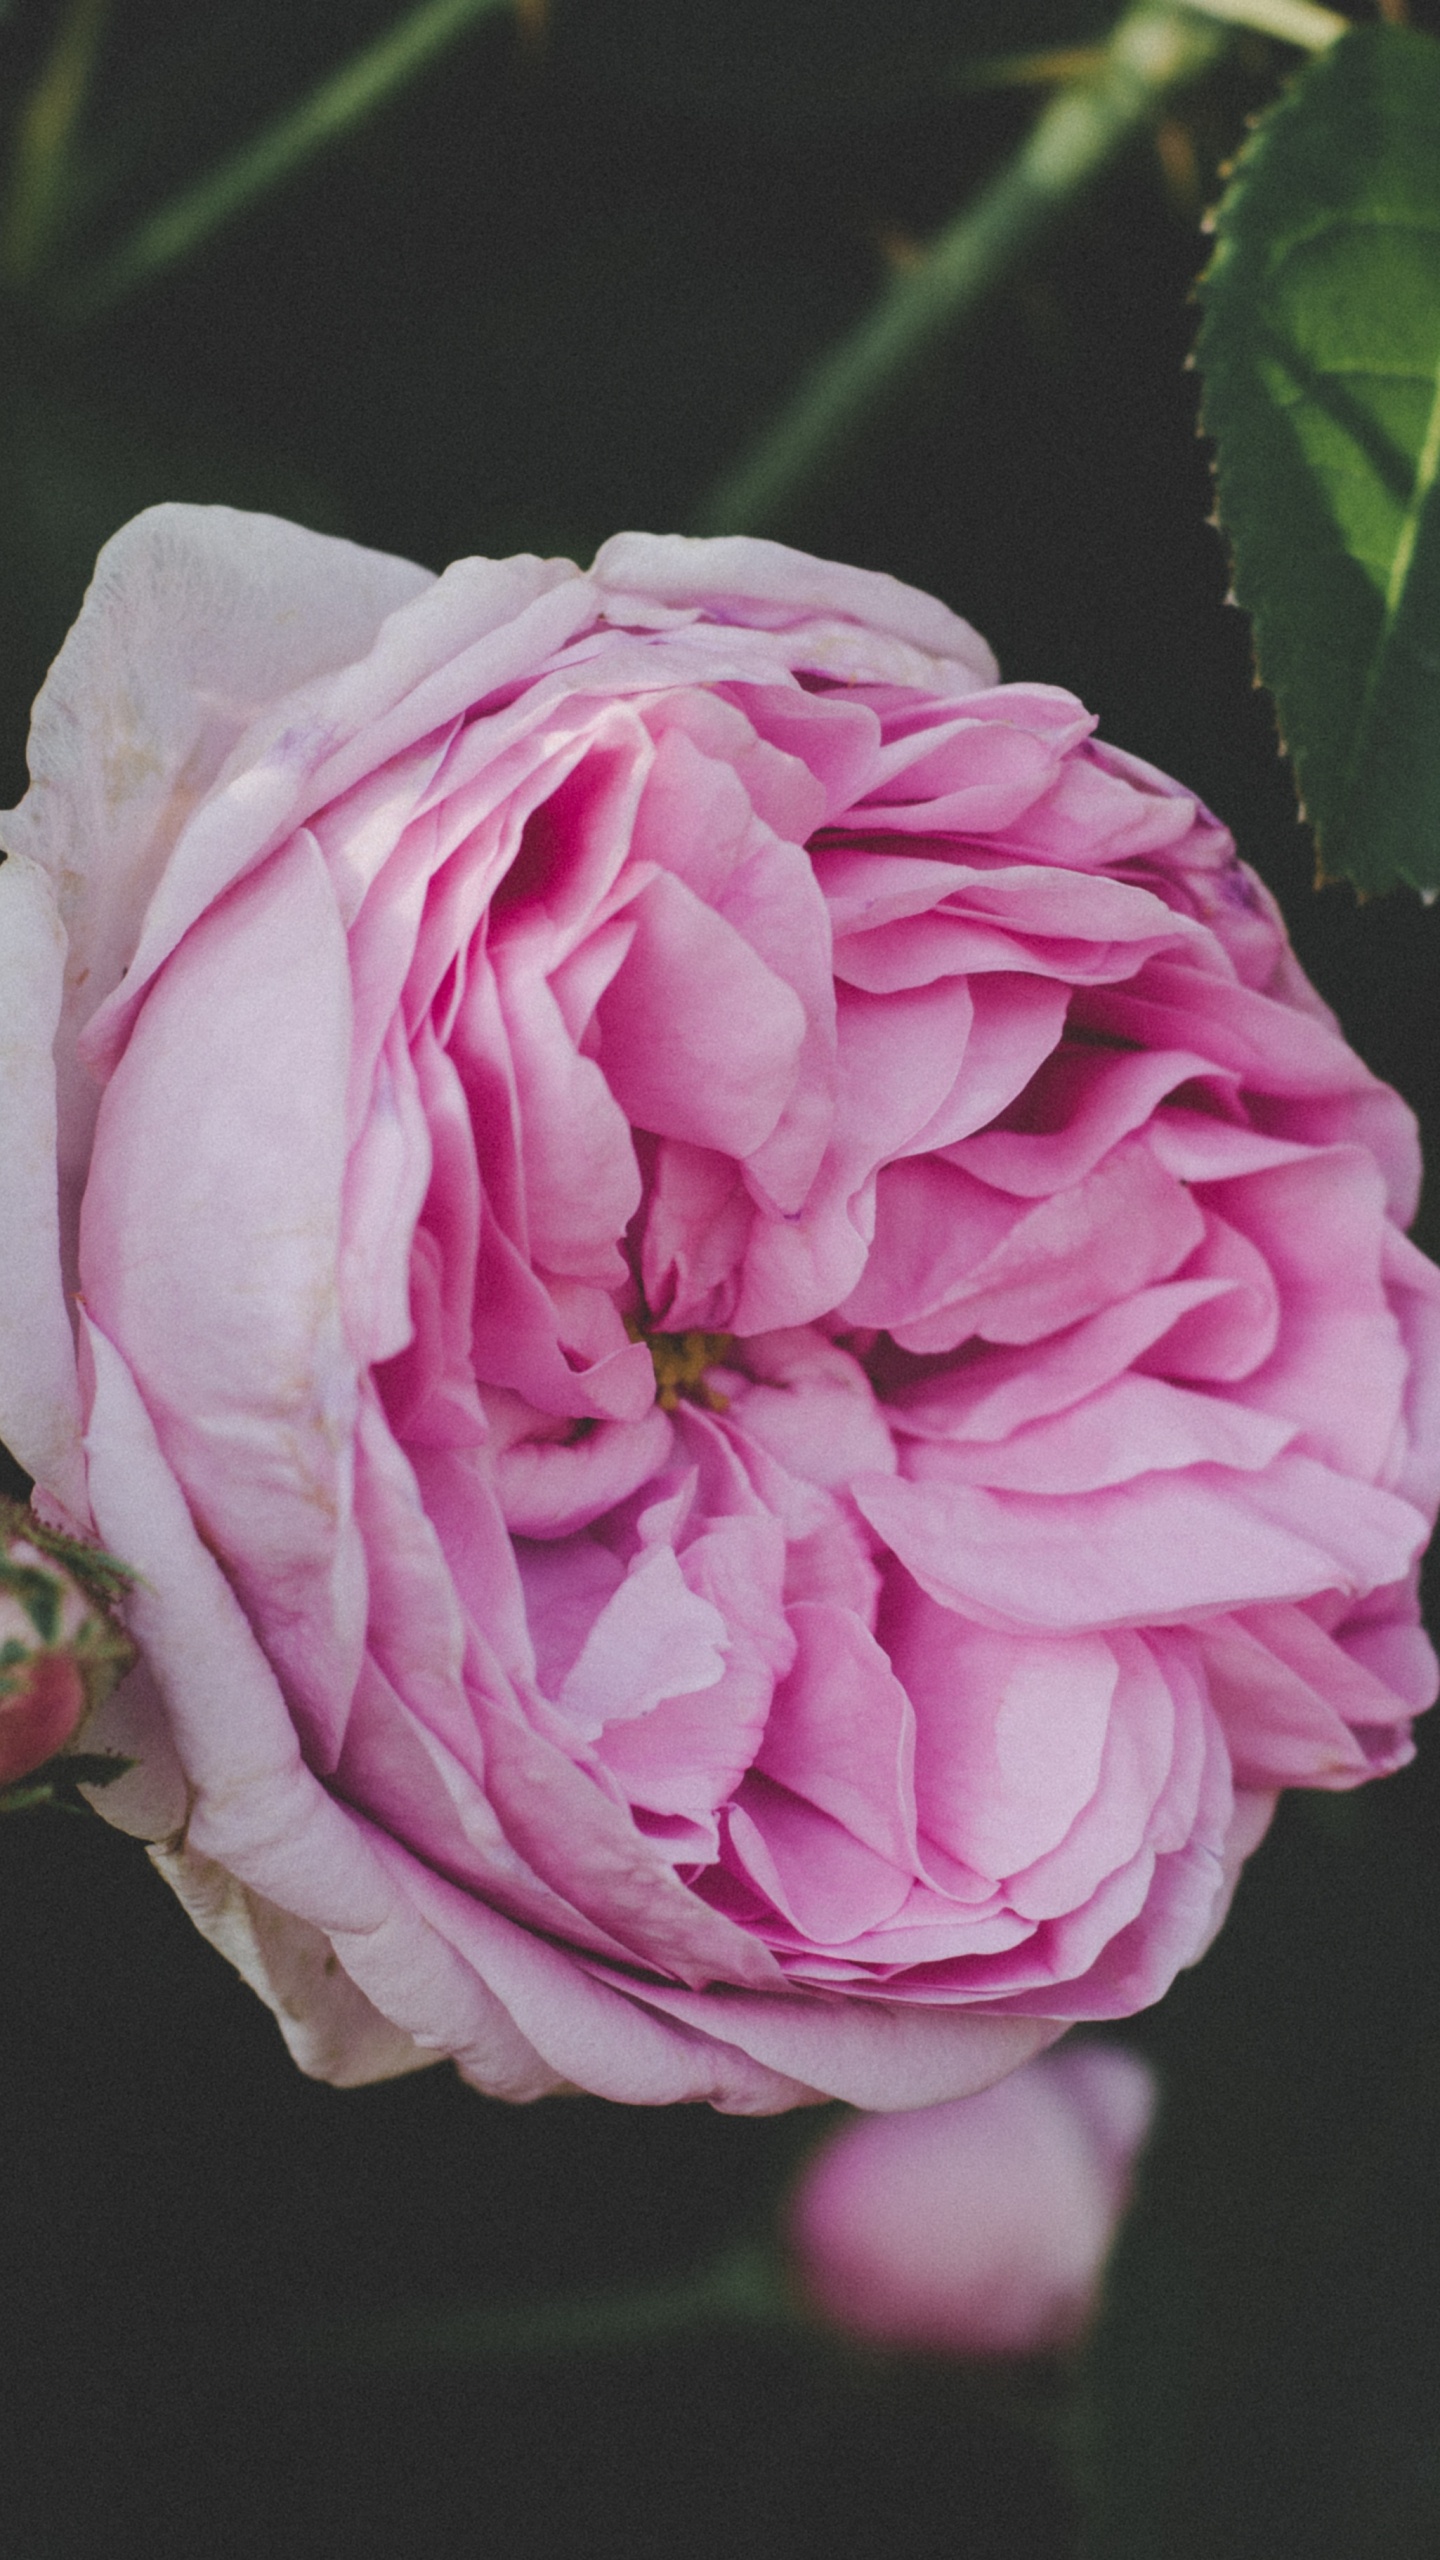 Rose Rose en Fleurs Pendant la Journée. Wallpaper in 1440x2560 Resolution